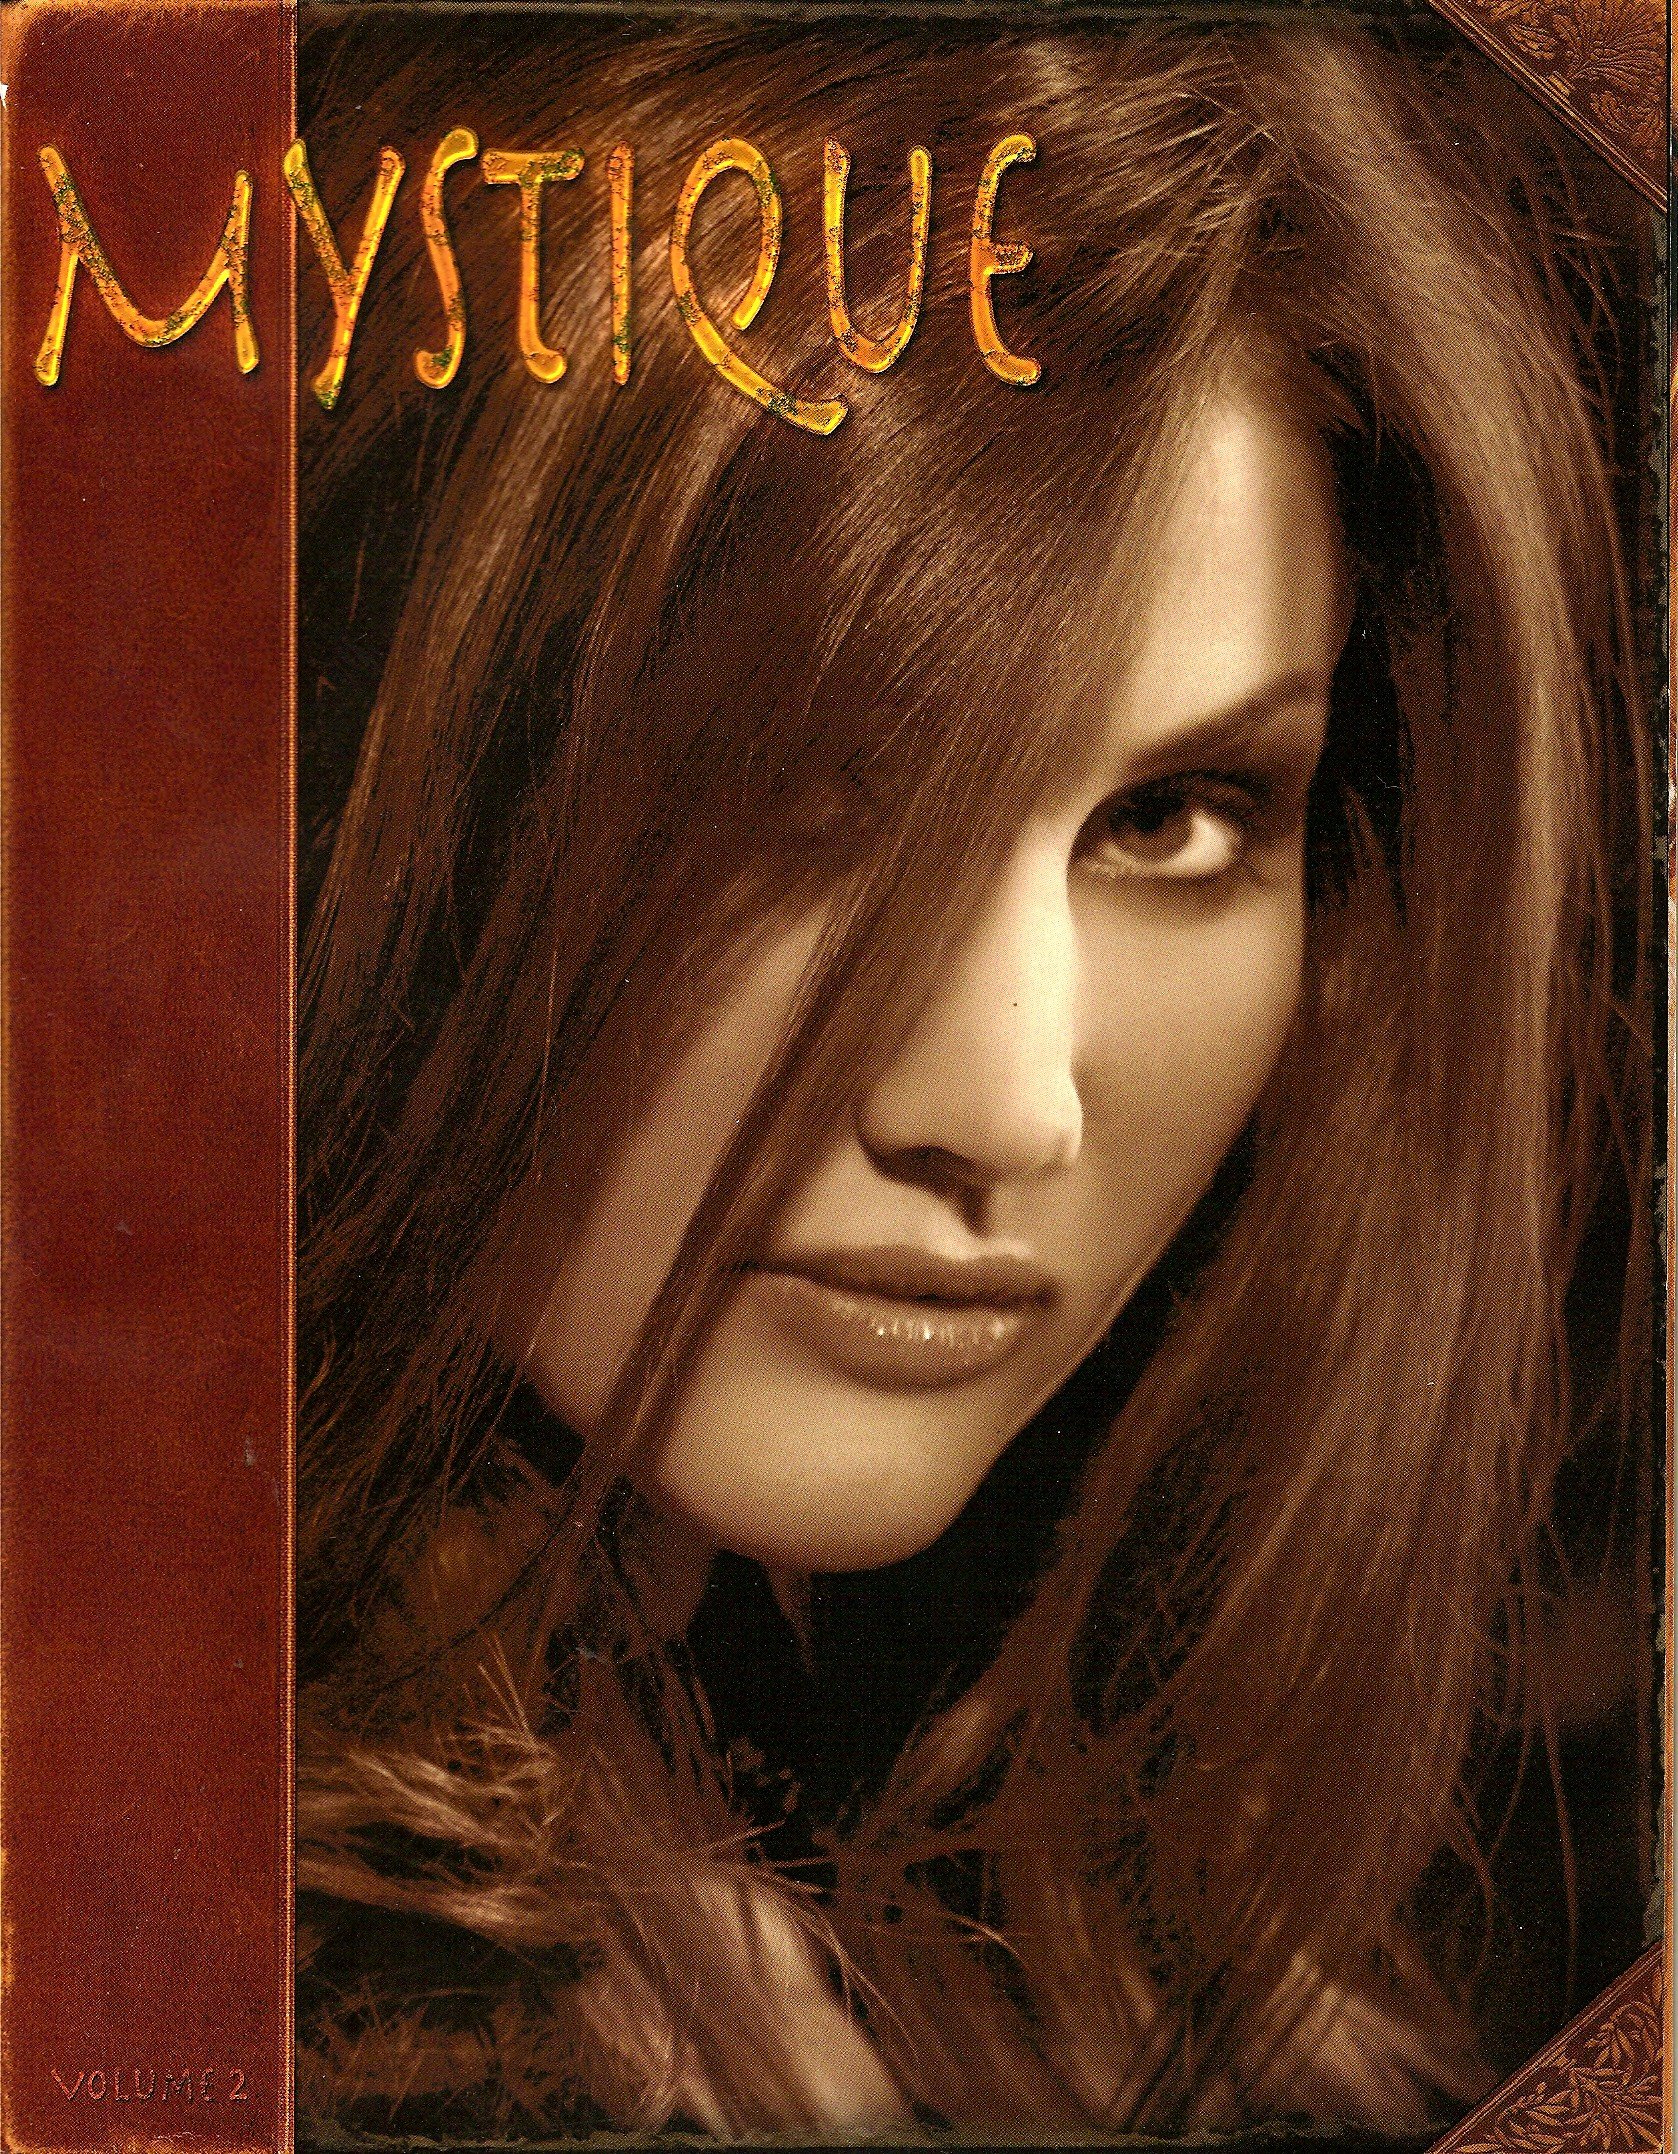 Mystique # 2, , Aria Giovanni, Katia Corriveau, Deanna Merryman M